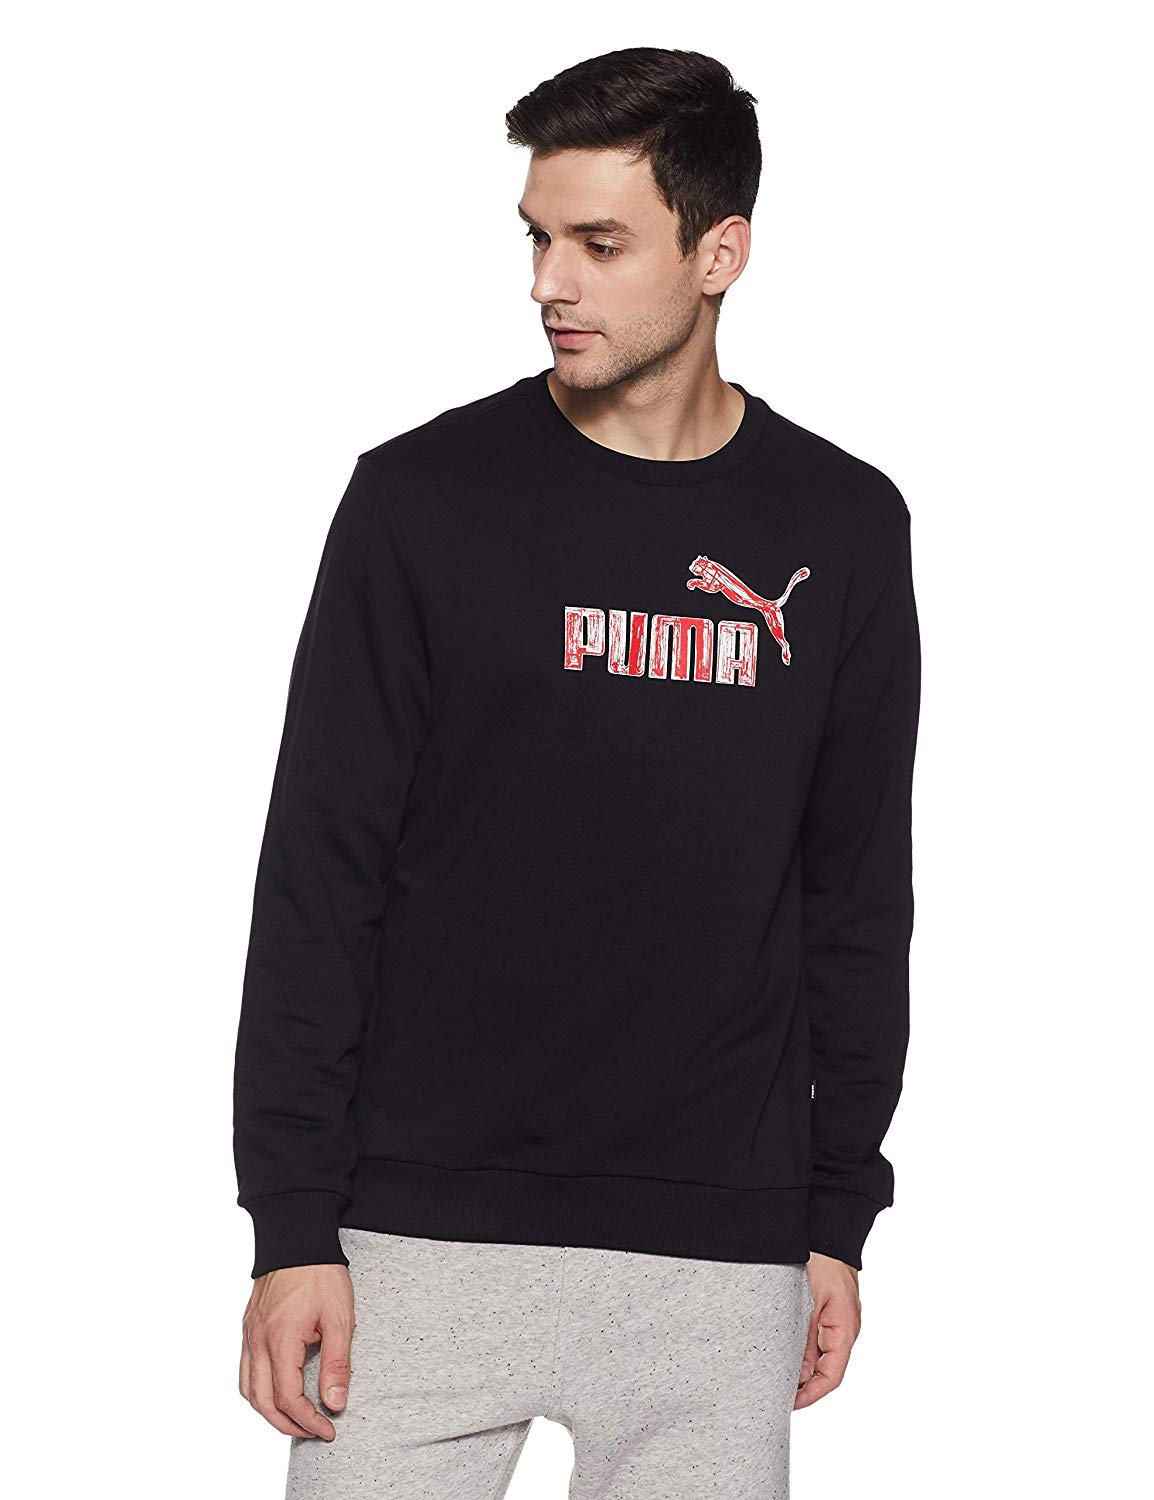 Puma Men's Sweatshirt : Loot Deal | shopping offers